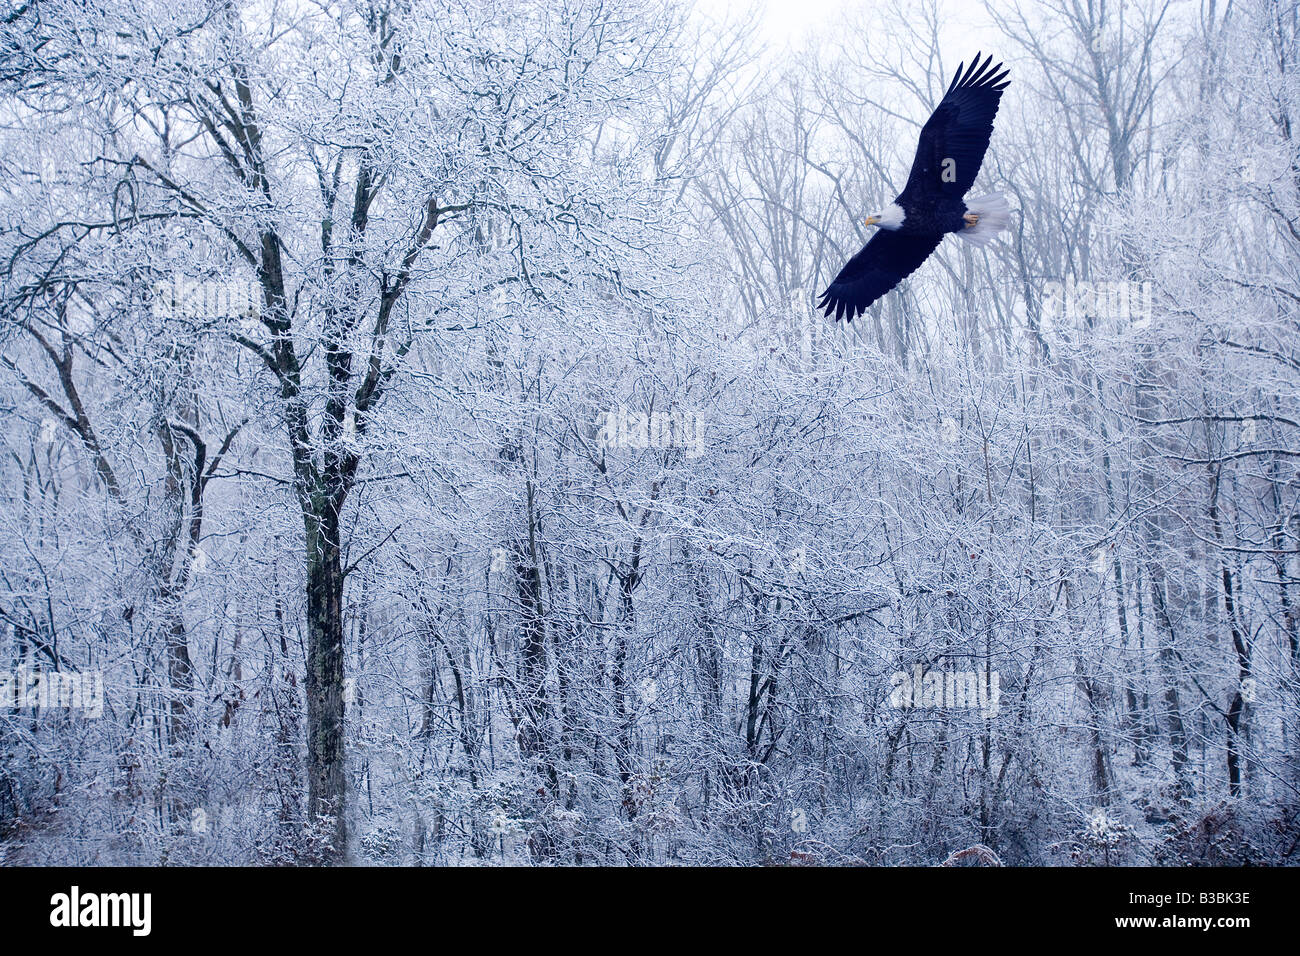 Bald eagle in flght during winter, Missouri Stock Photo